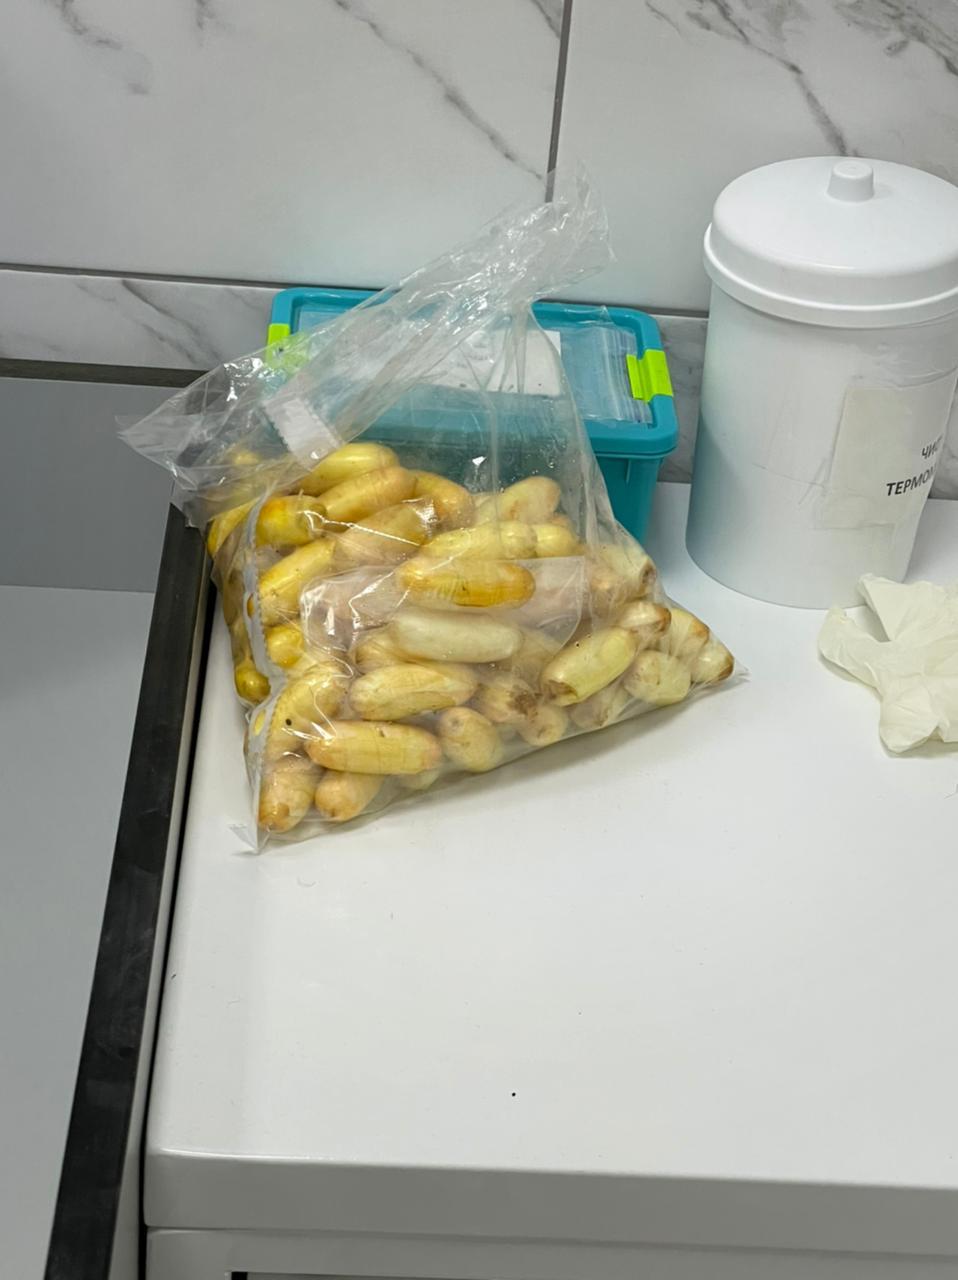 У иностранца в ”Борисполе” обнаружили килограмм кокаина в желудке: подробности инцидента  - фото 3